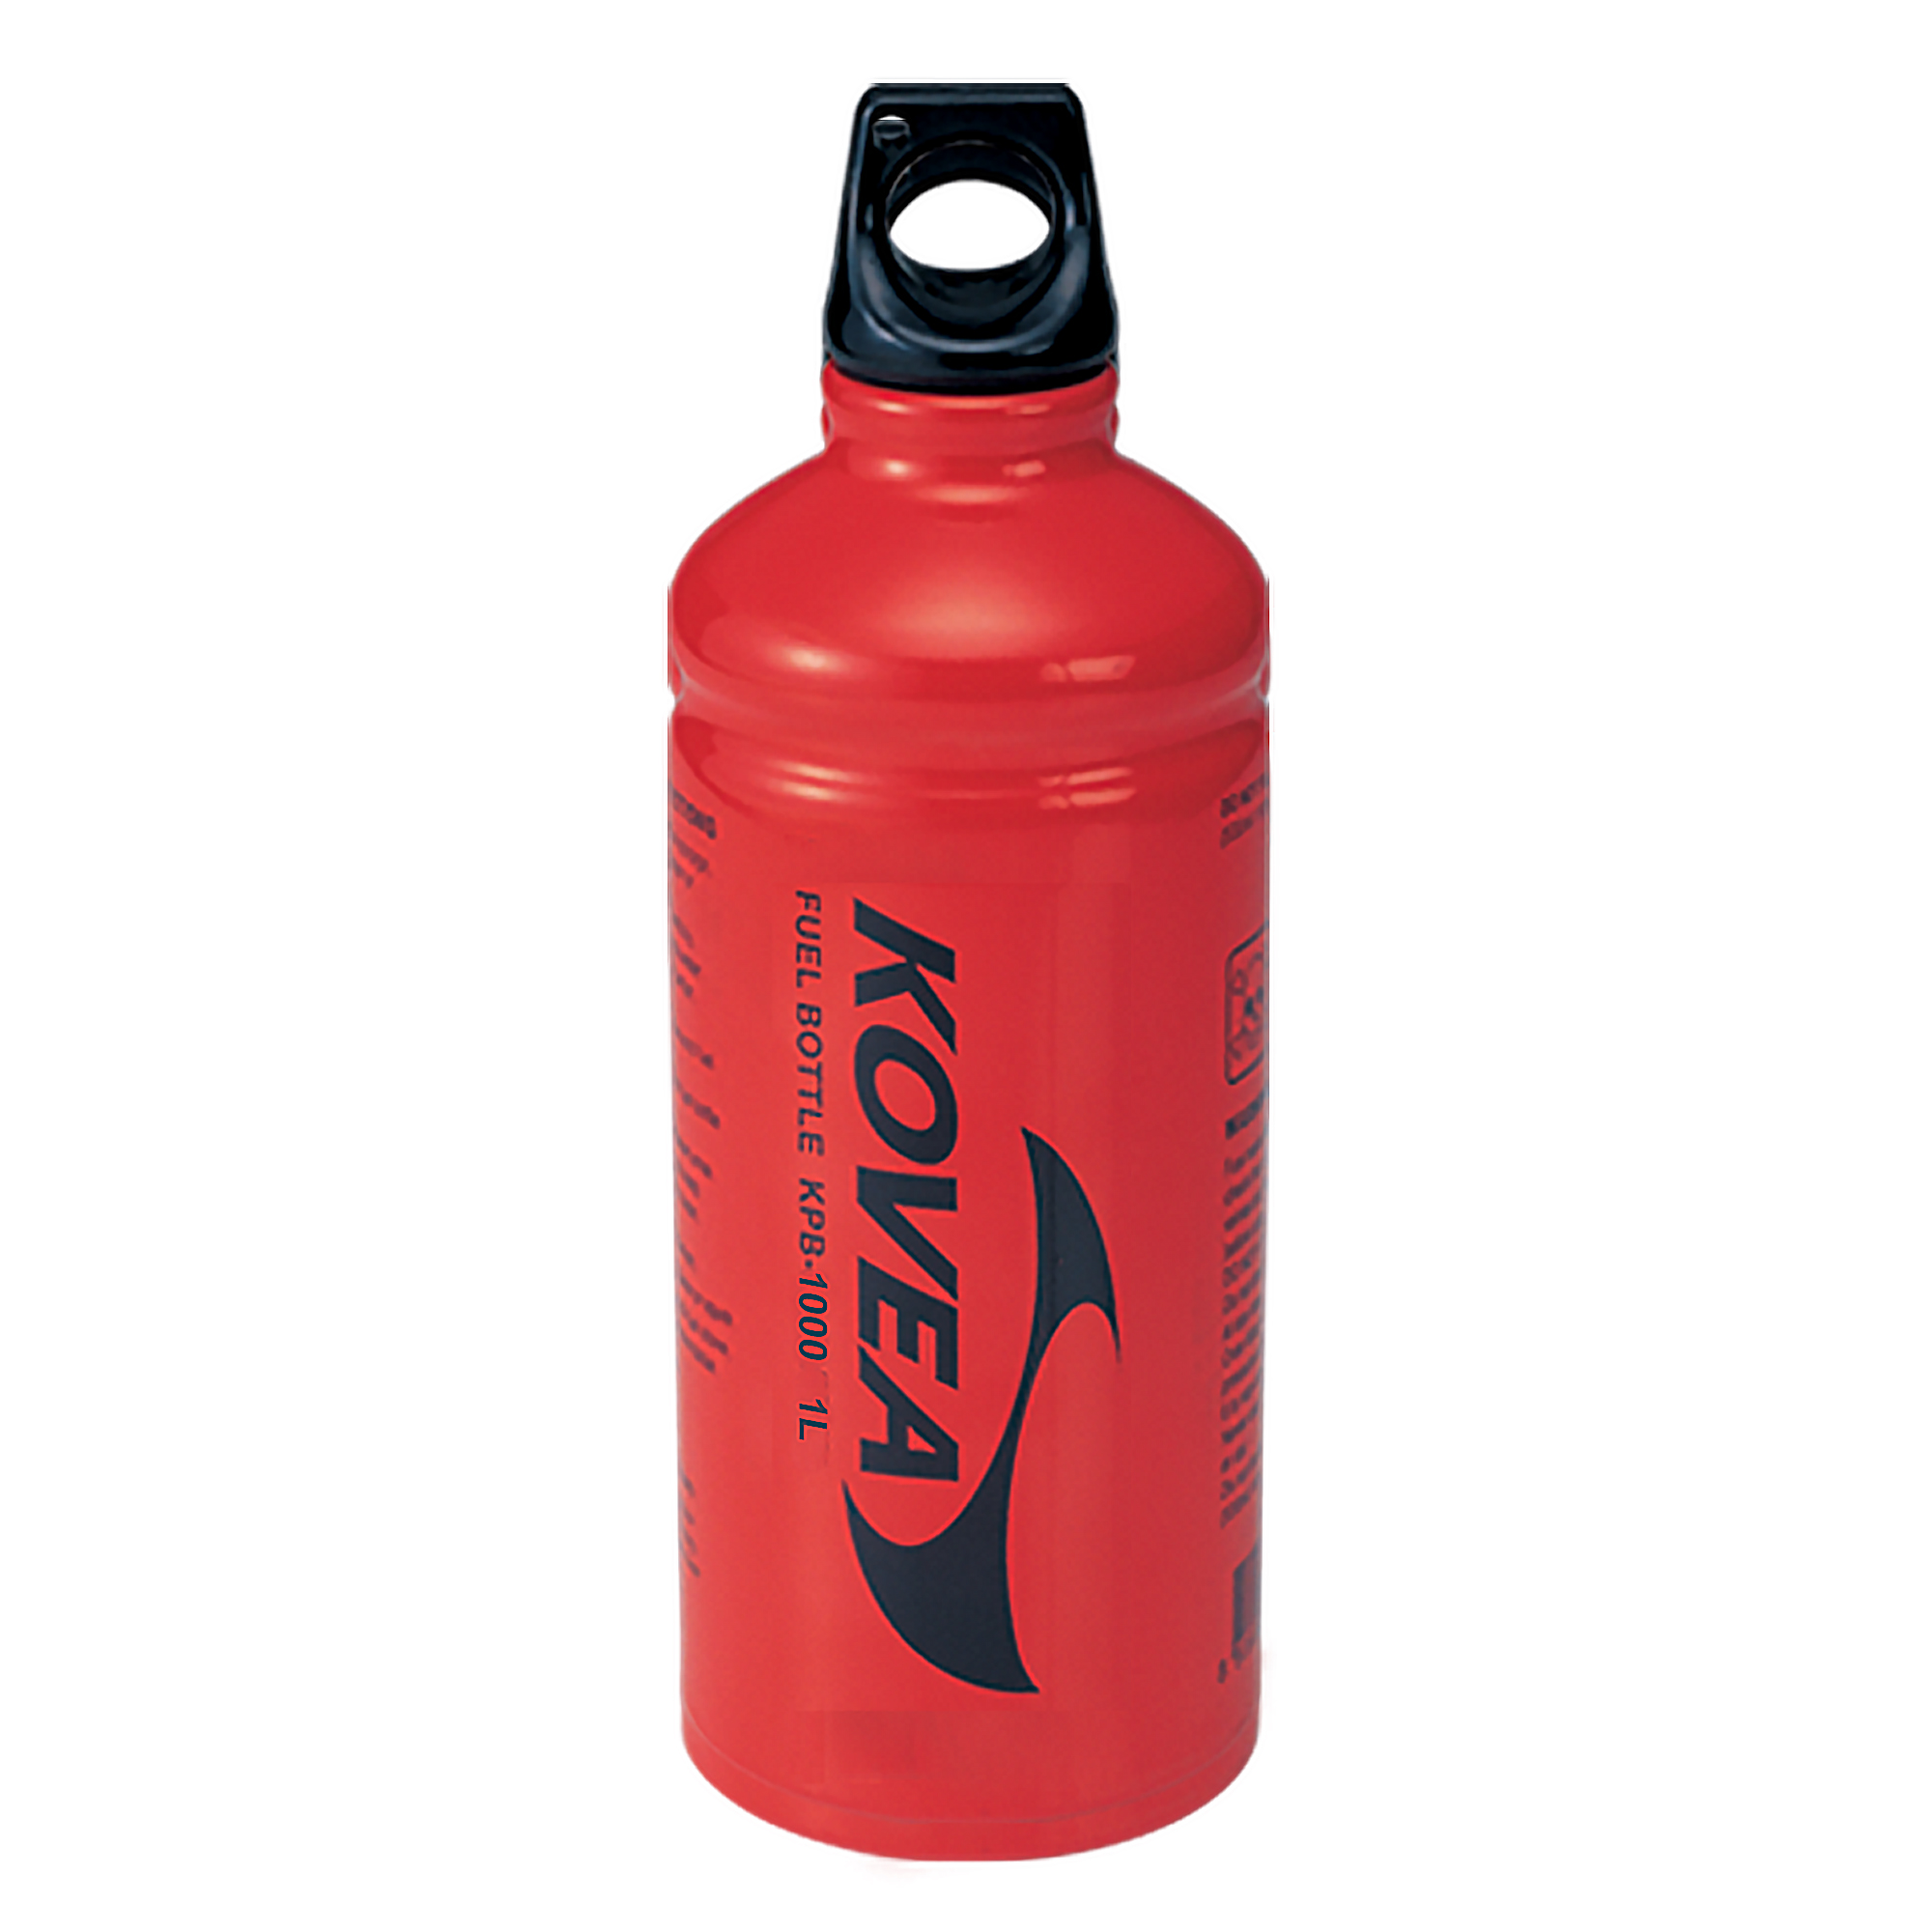 Фляга для топлива Kovea Fuel bottle 1л